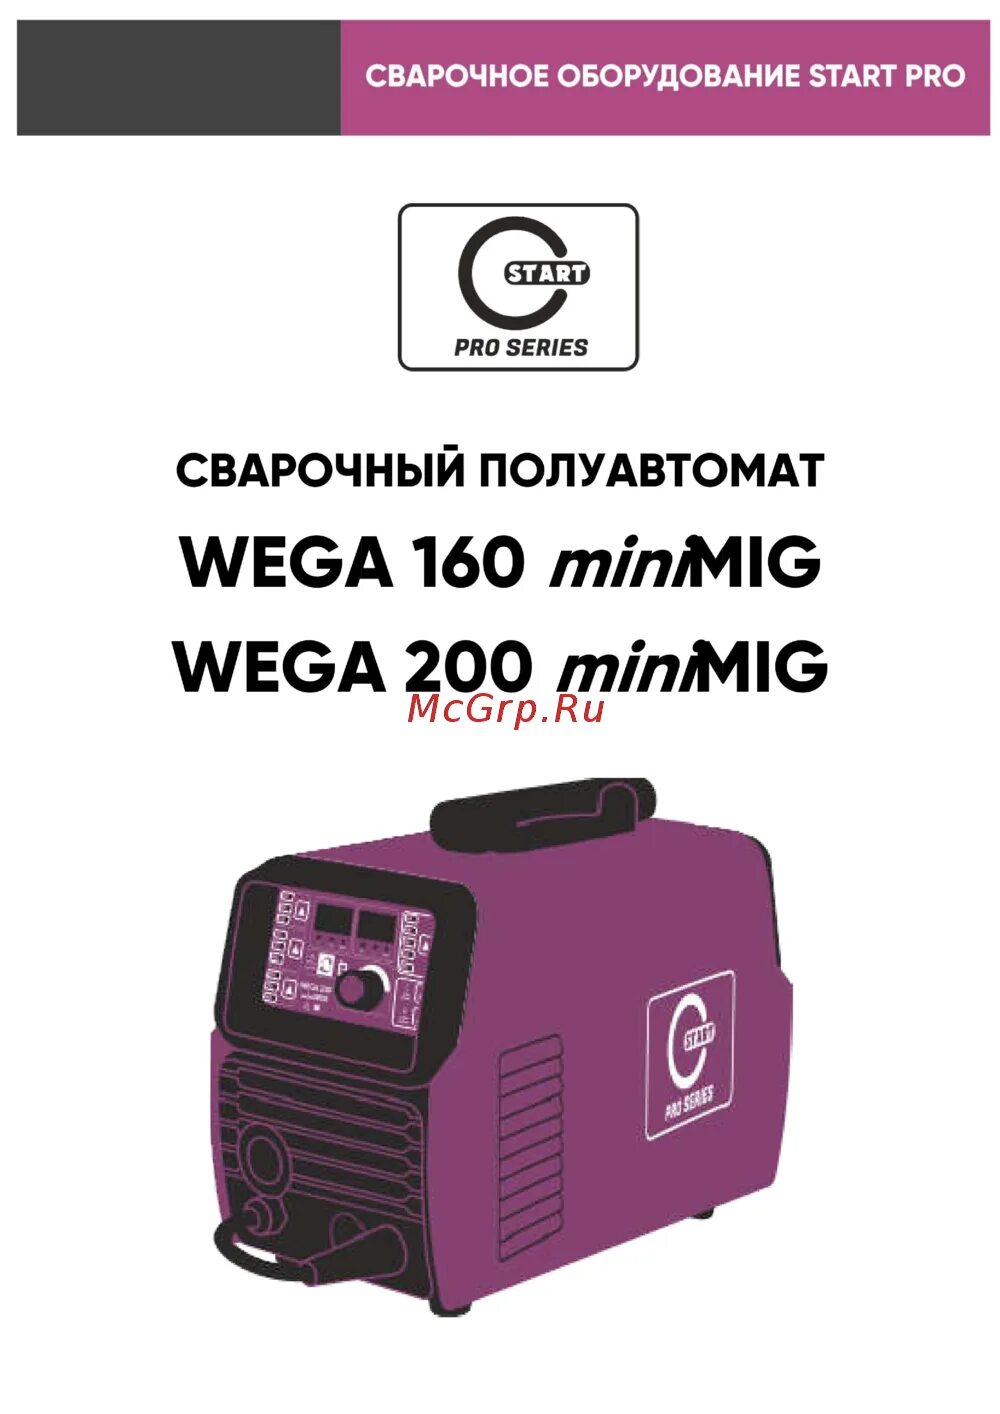 Wega 200 Minimig. Start Wega 200 Minimig. Полуавтомат Wega 200 Minimig start Pro Series. Start Minimig 200 сварочный полуавтомат 2w202. Start wega minimig